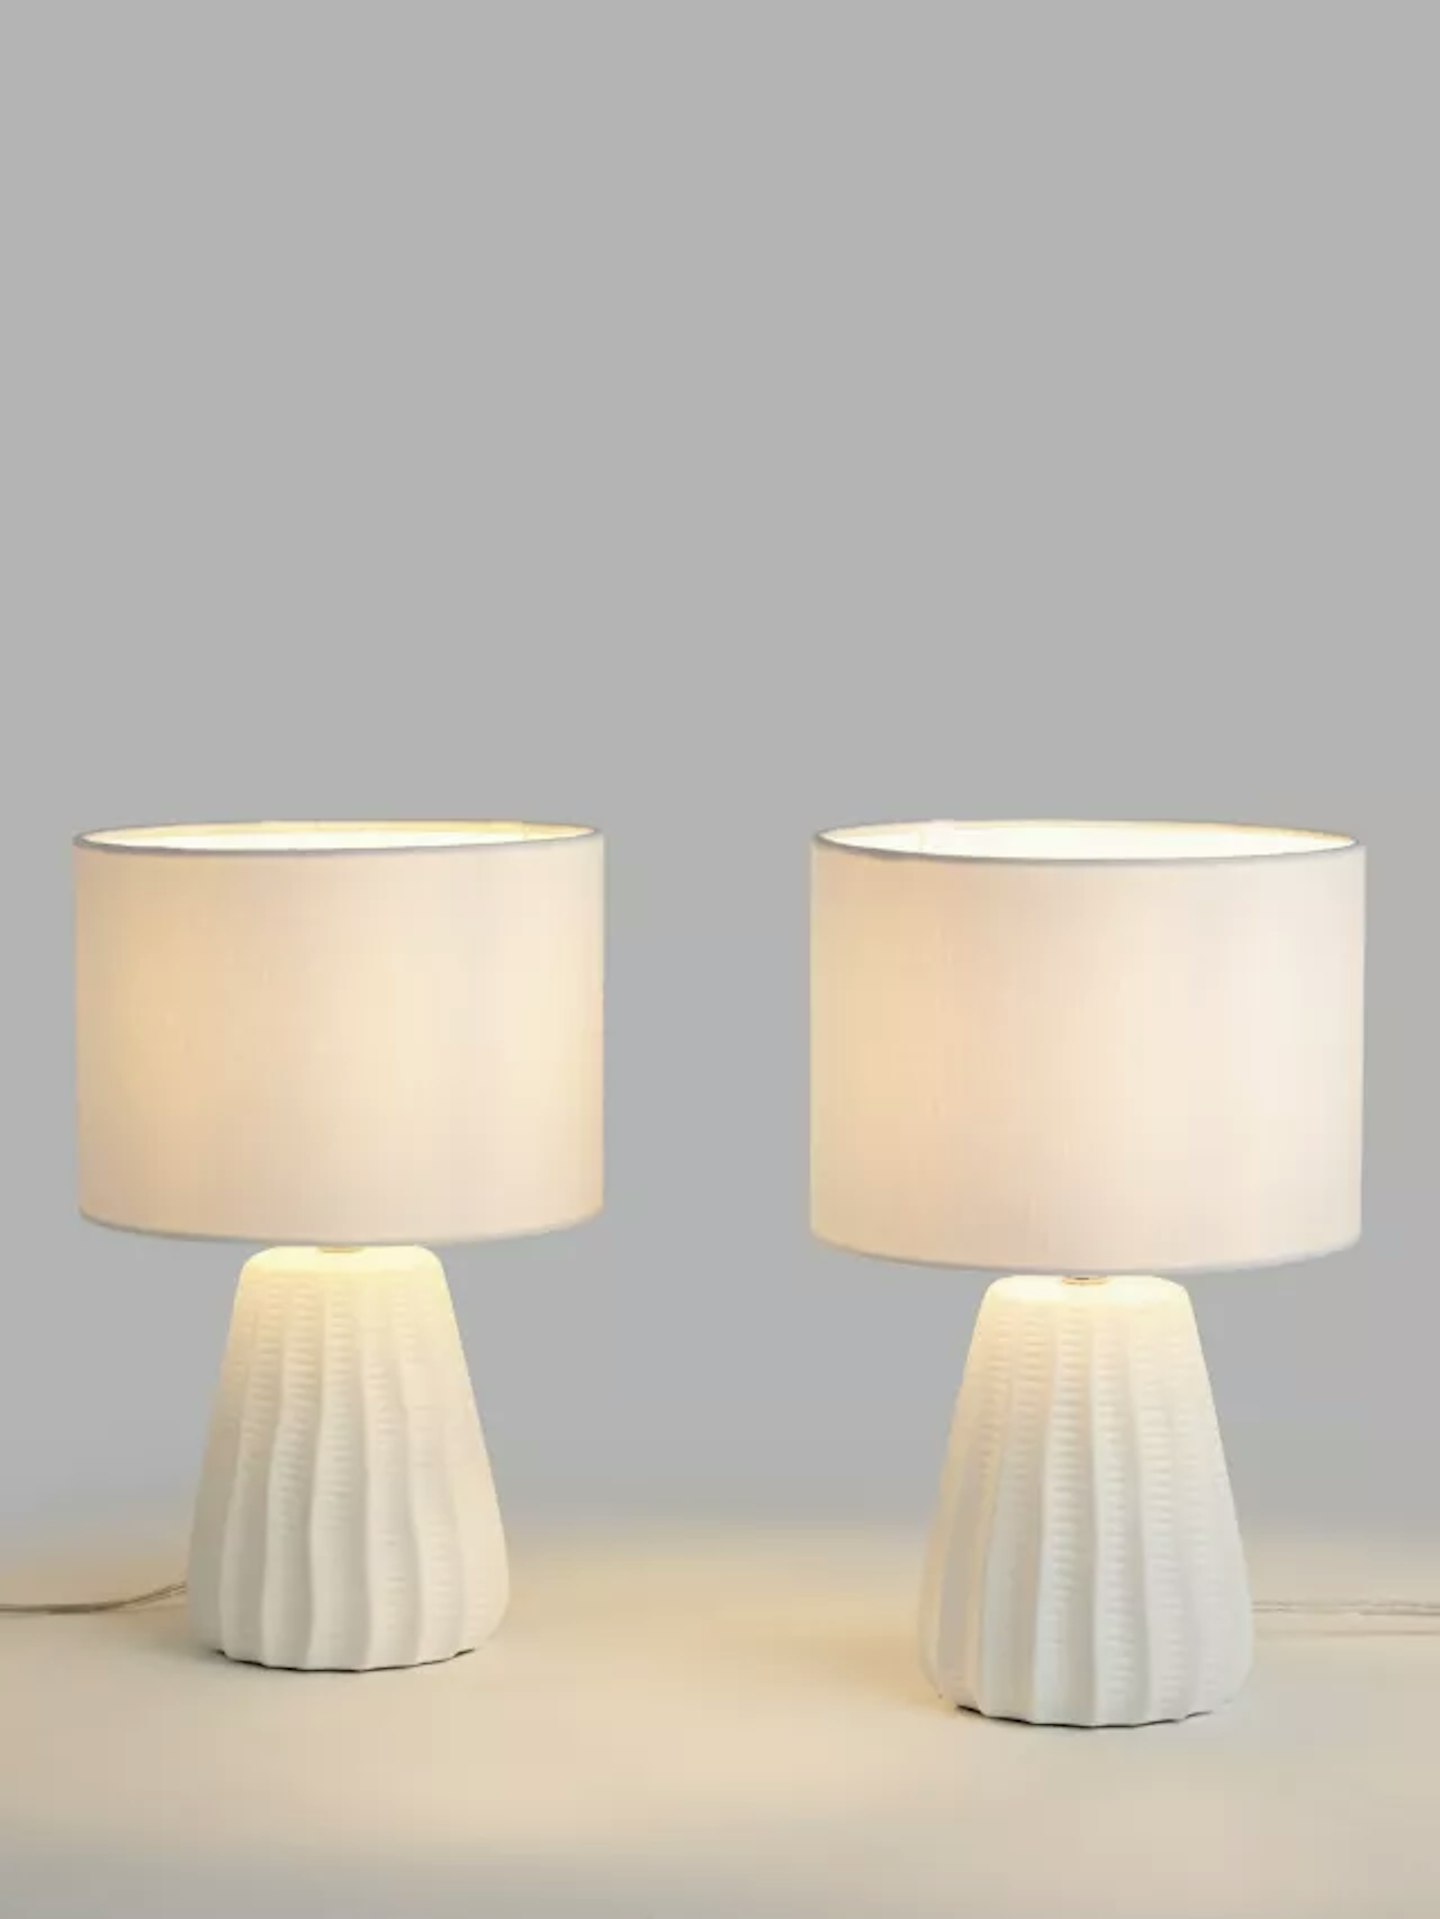 John Lewis lamps